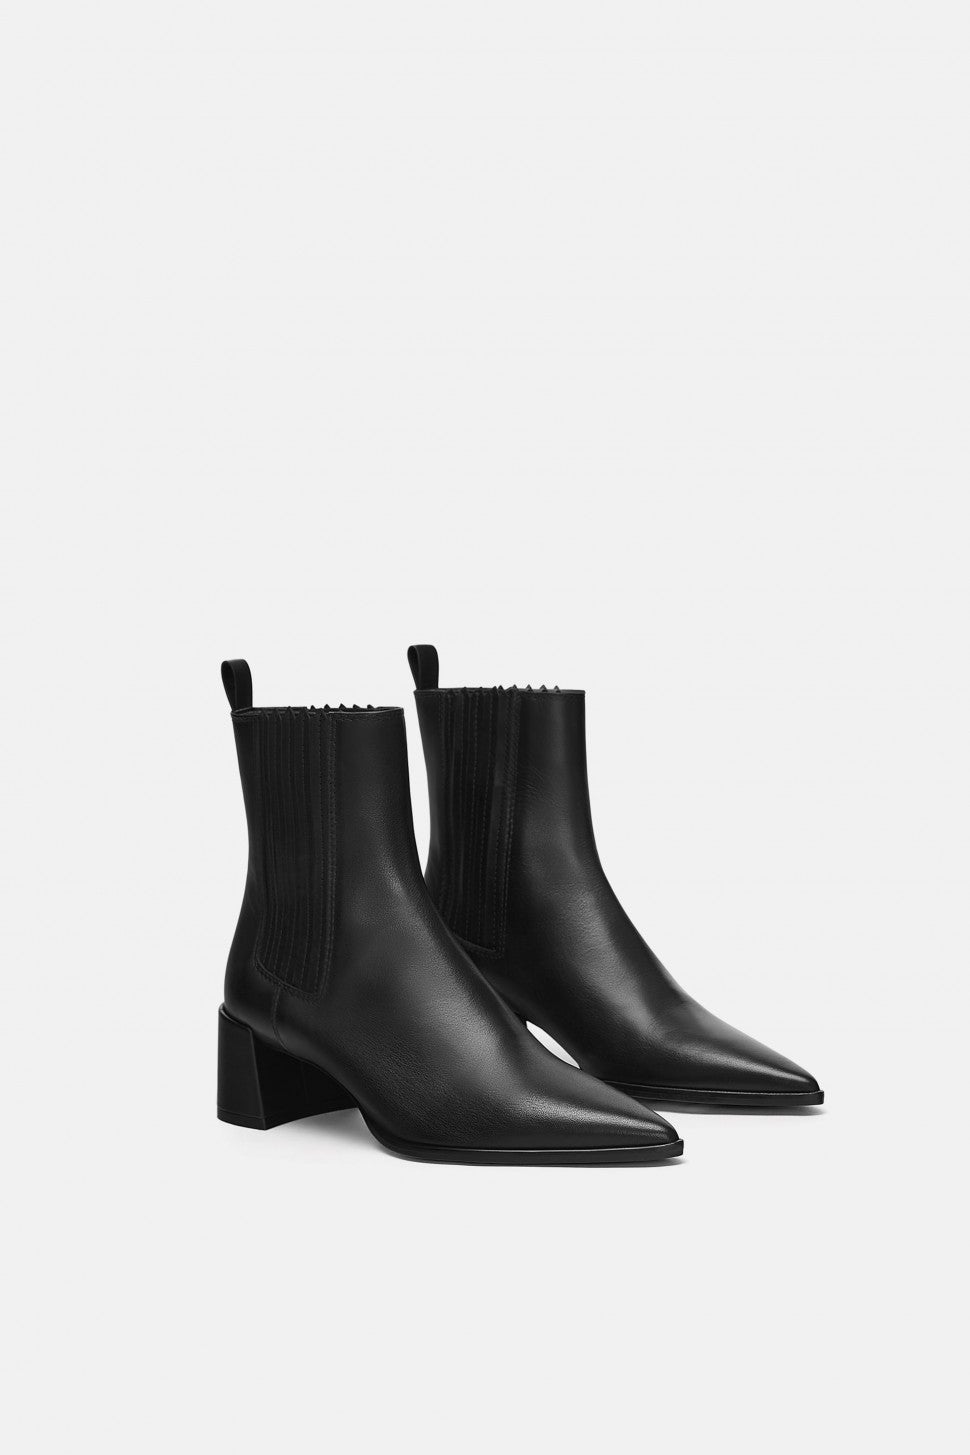 Zara black ankle boots